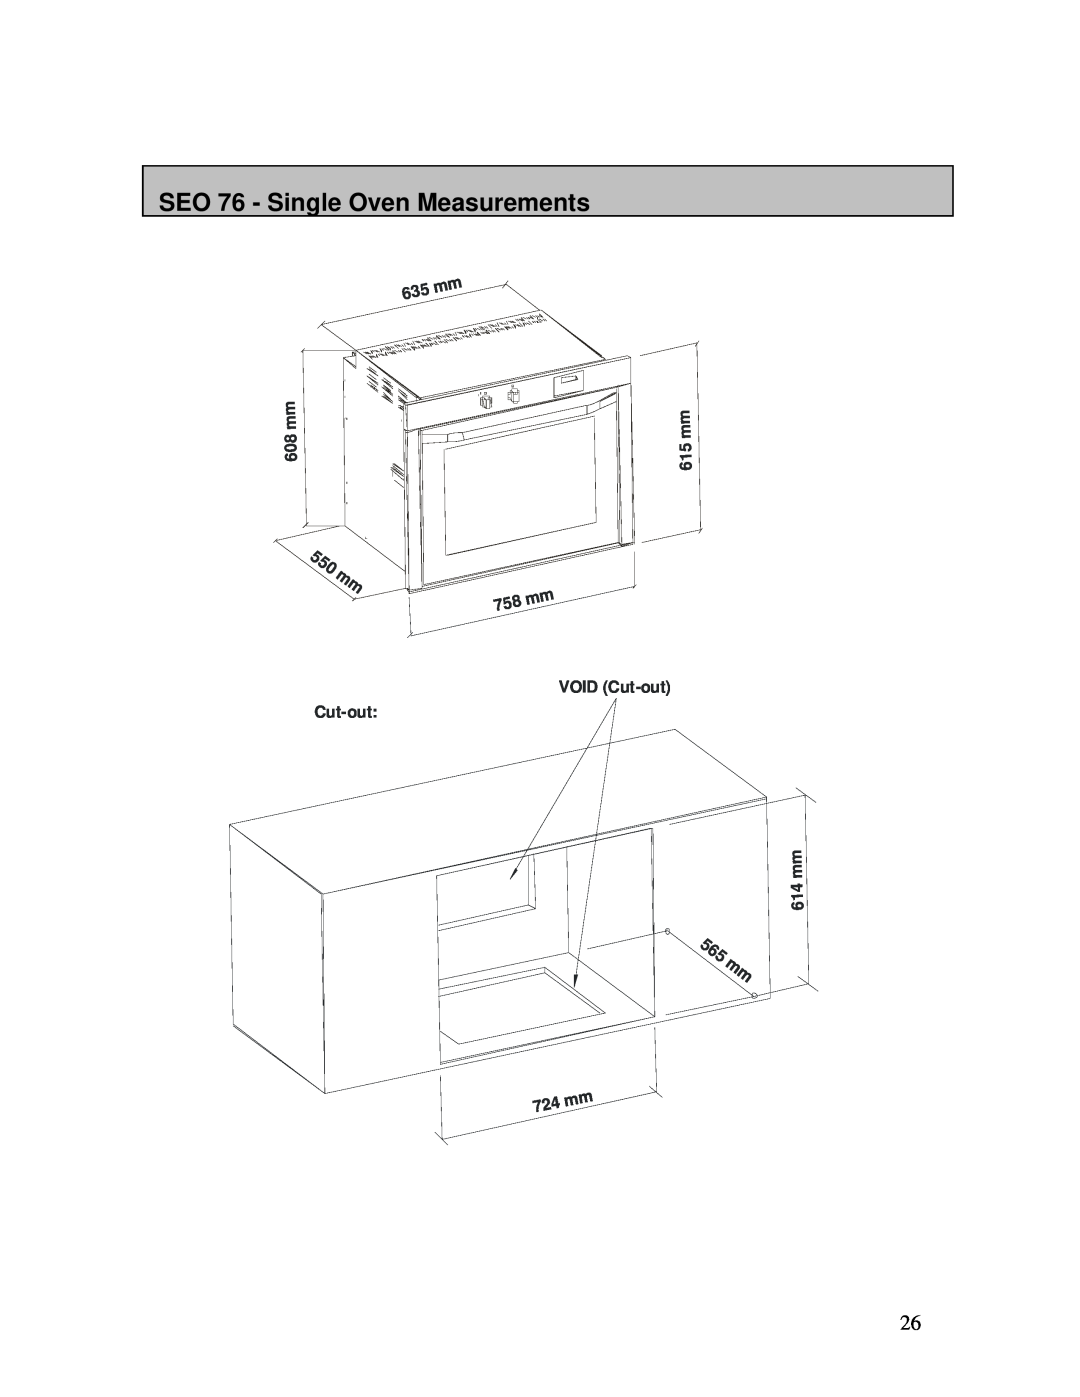 AEG B3007H-L-B user manual SEO 76 - Single Oven Measurements, 5 6 5mm, m m 4, VOID Cut-out 